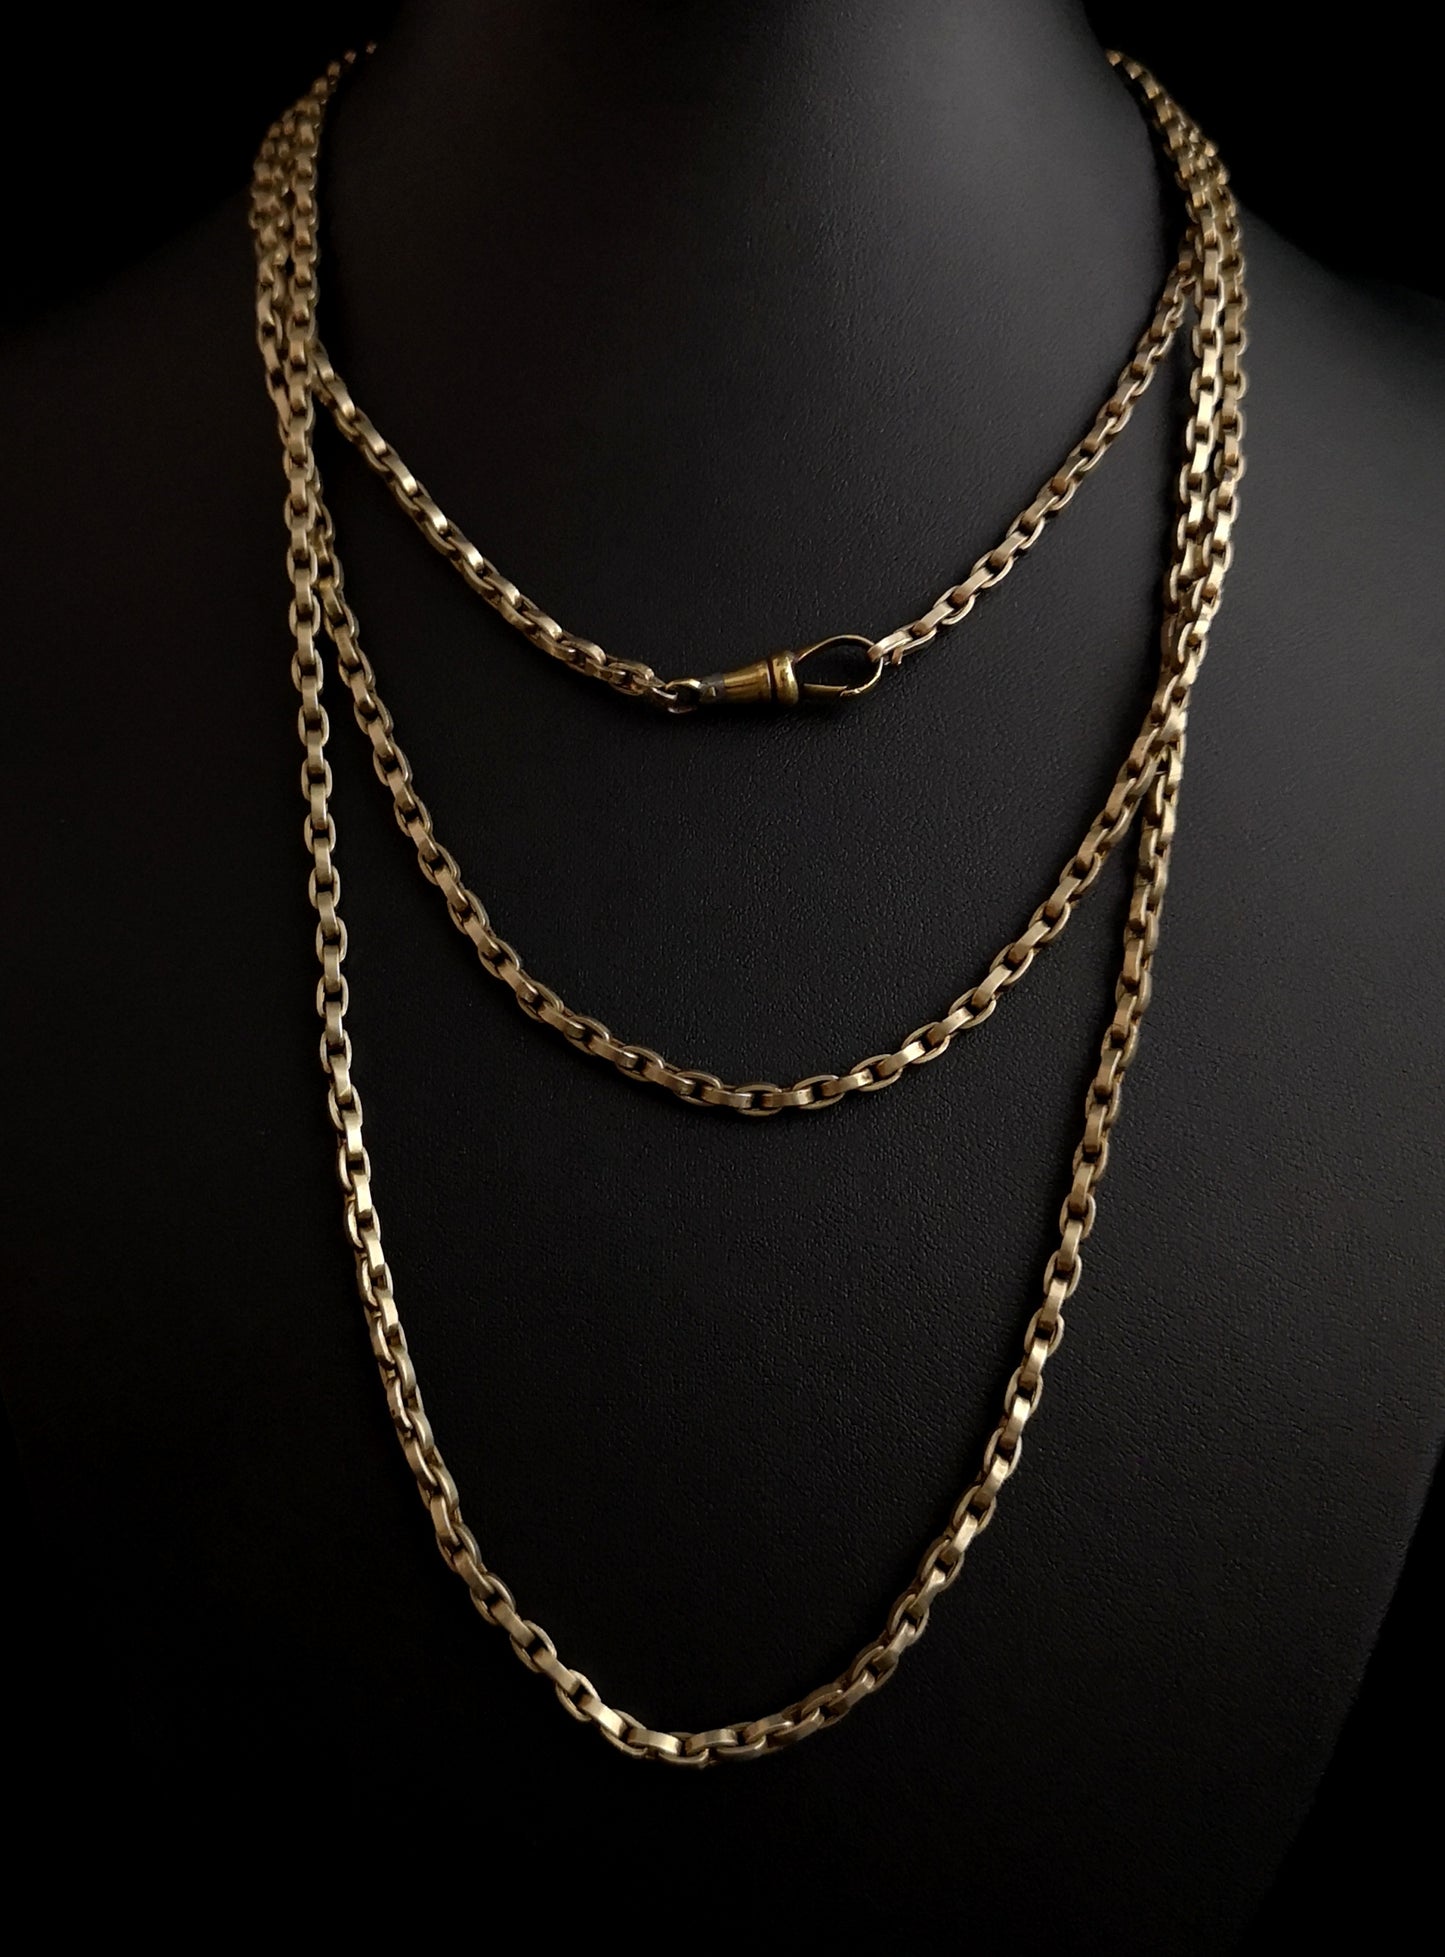 Antique longuard chain, Victorian muff chain necklace